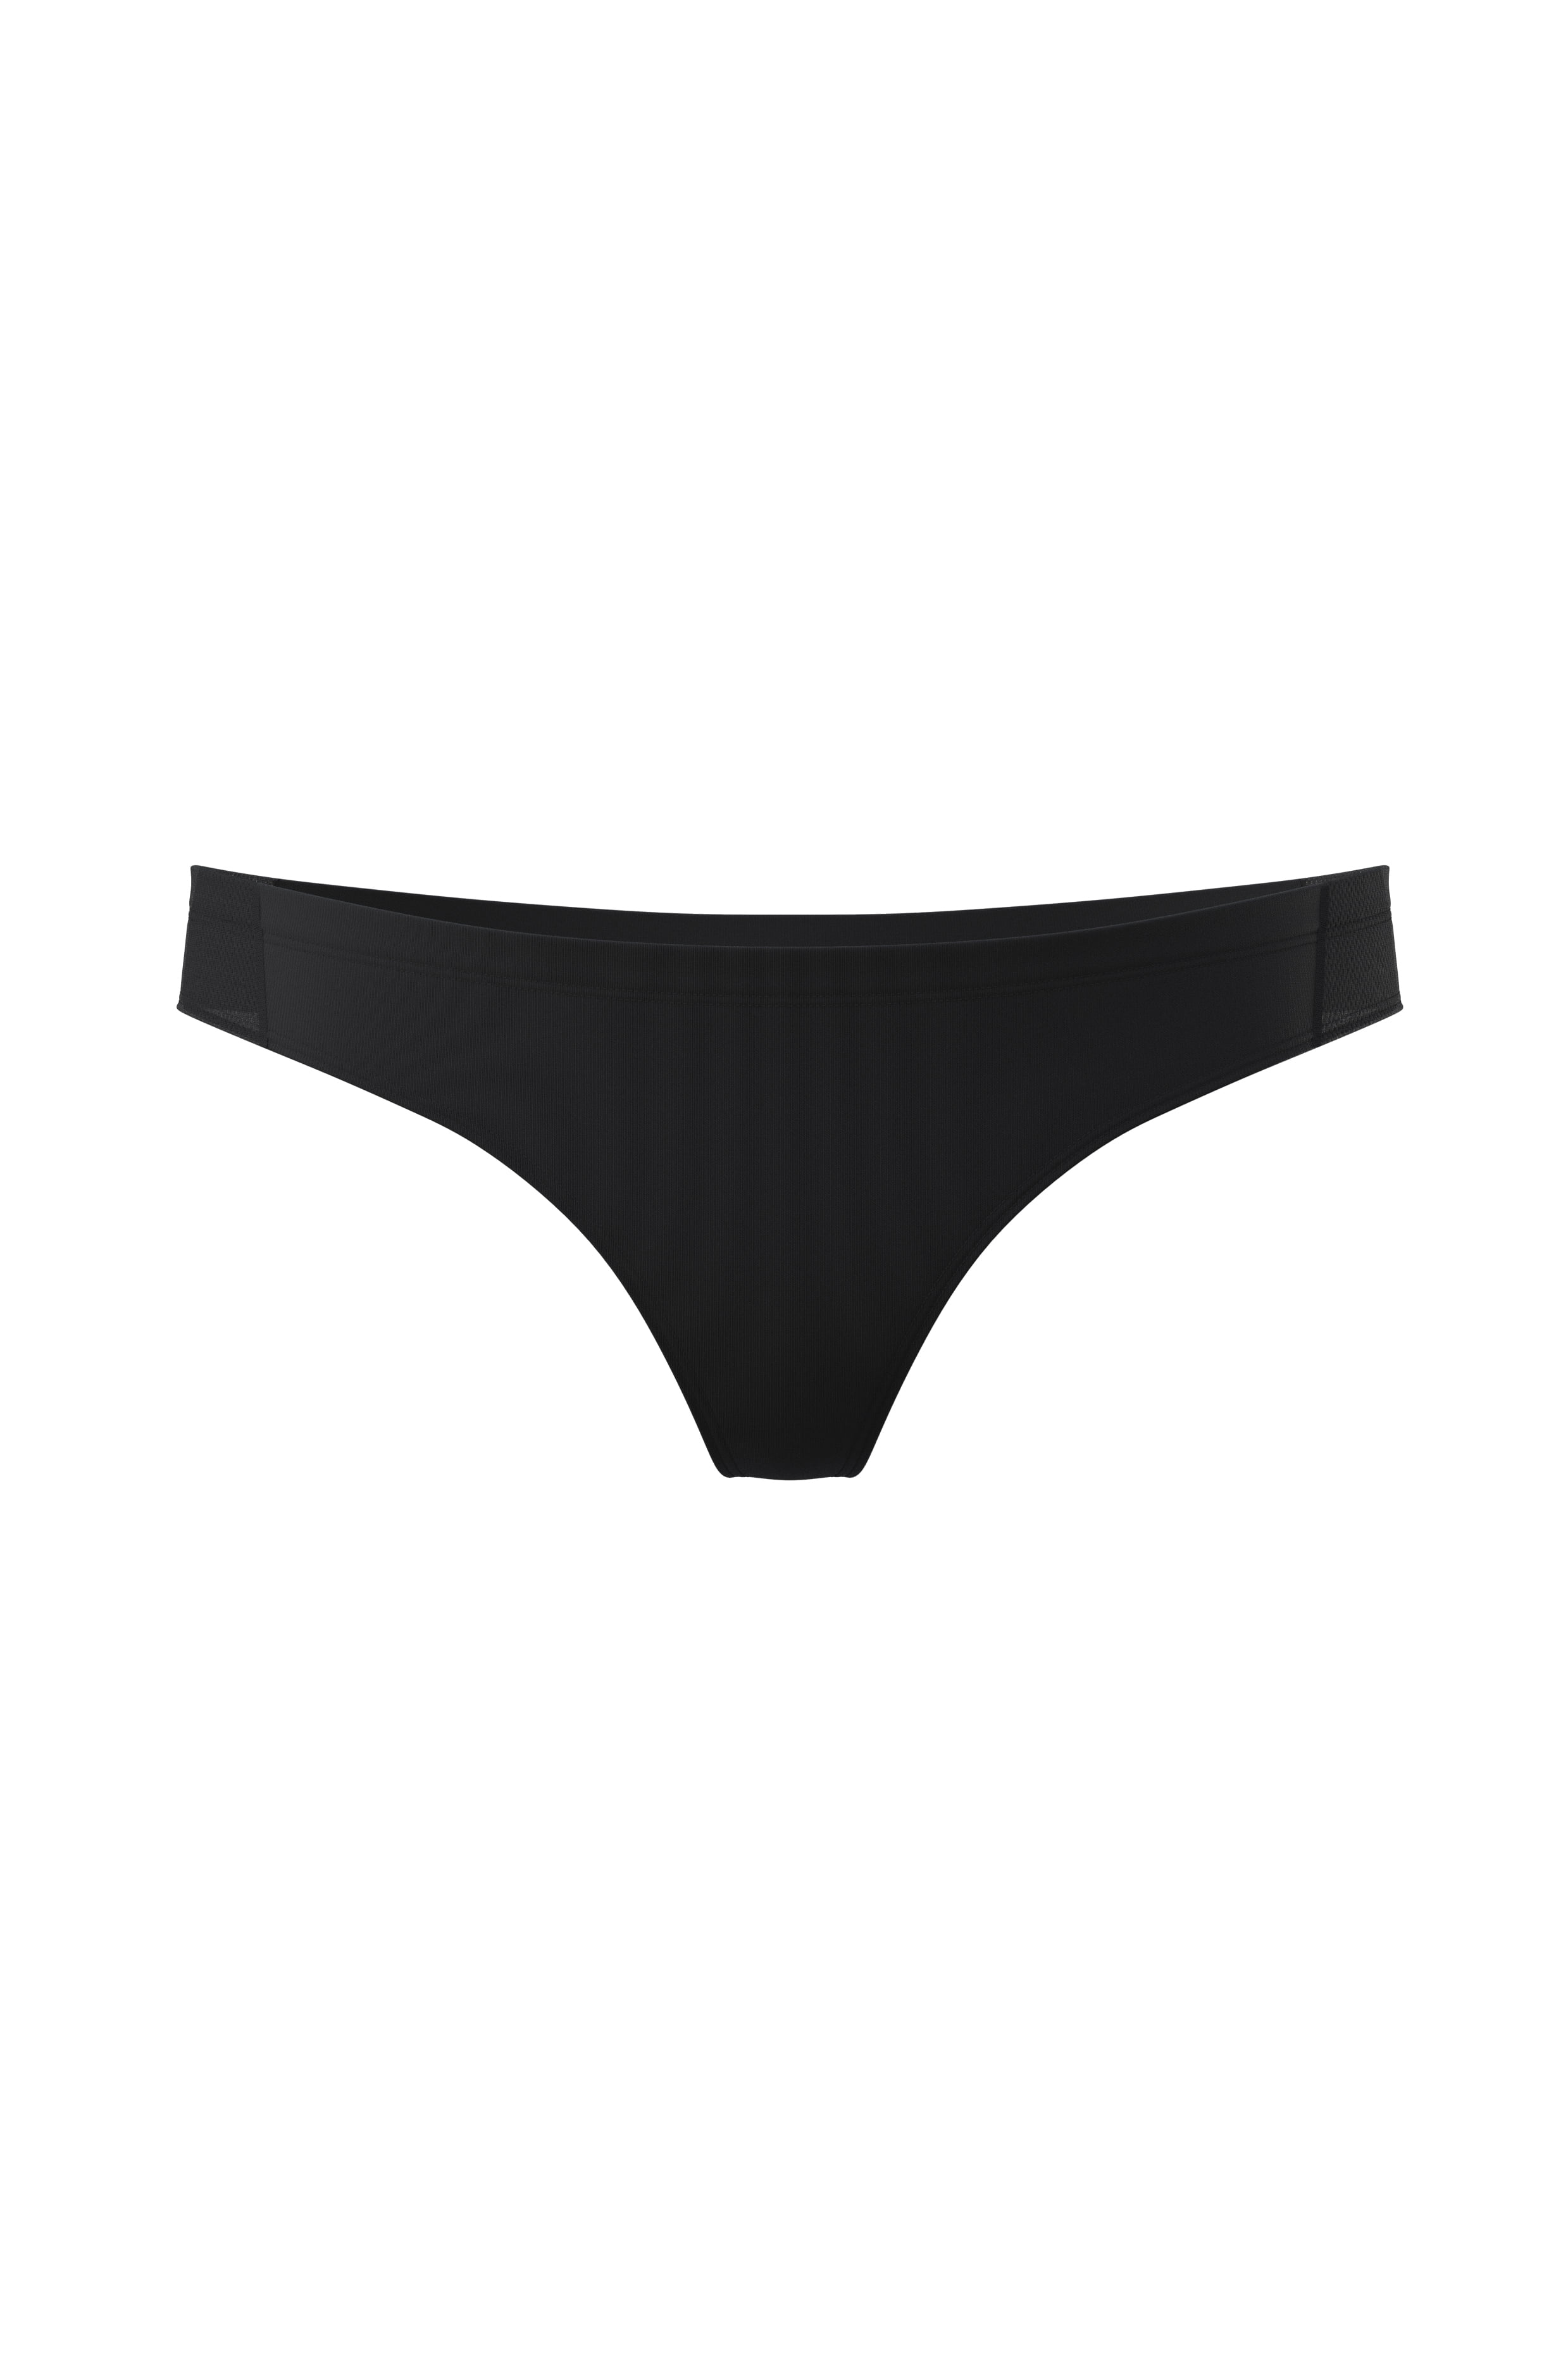 Adidas Women's Seamless Thong Underwear (Black, XS) - 4A1H64 